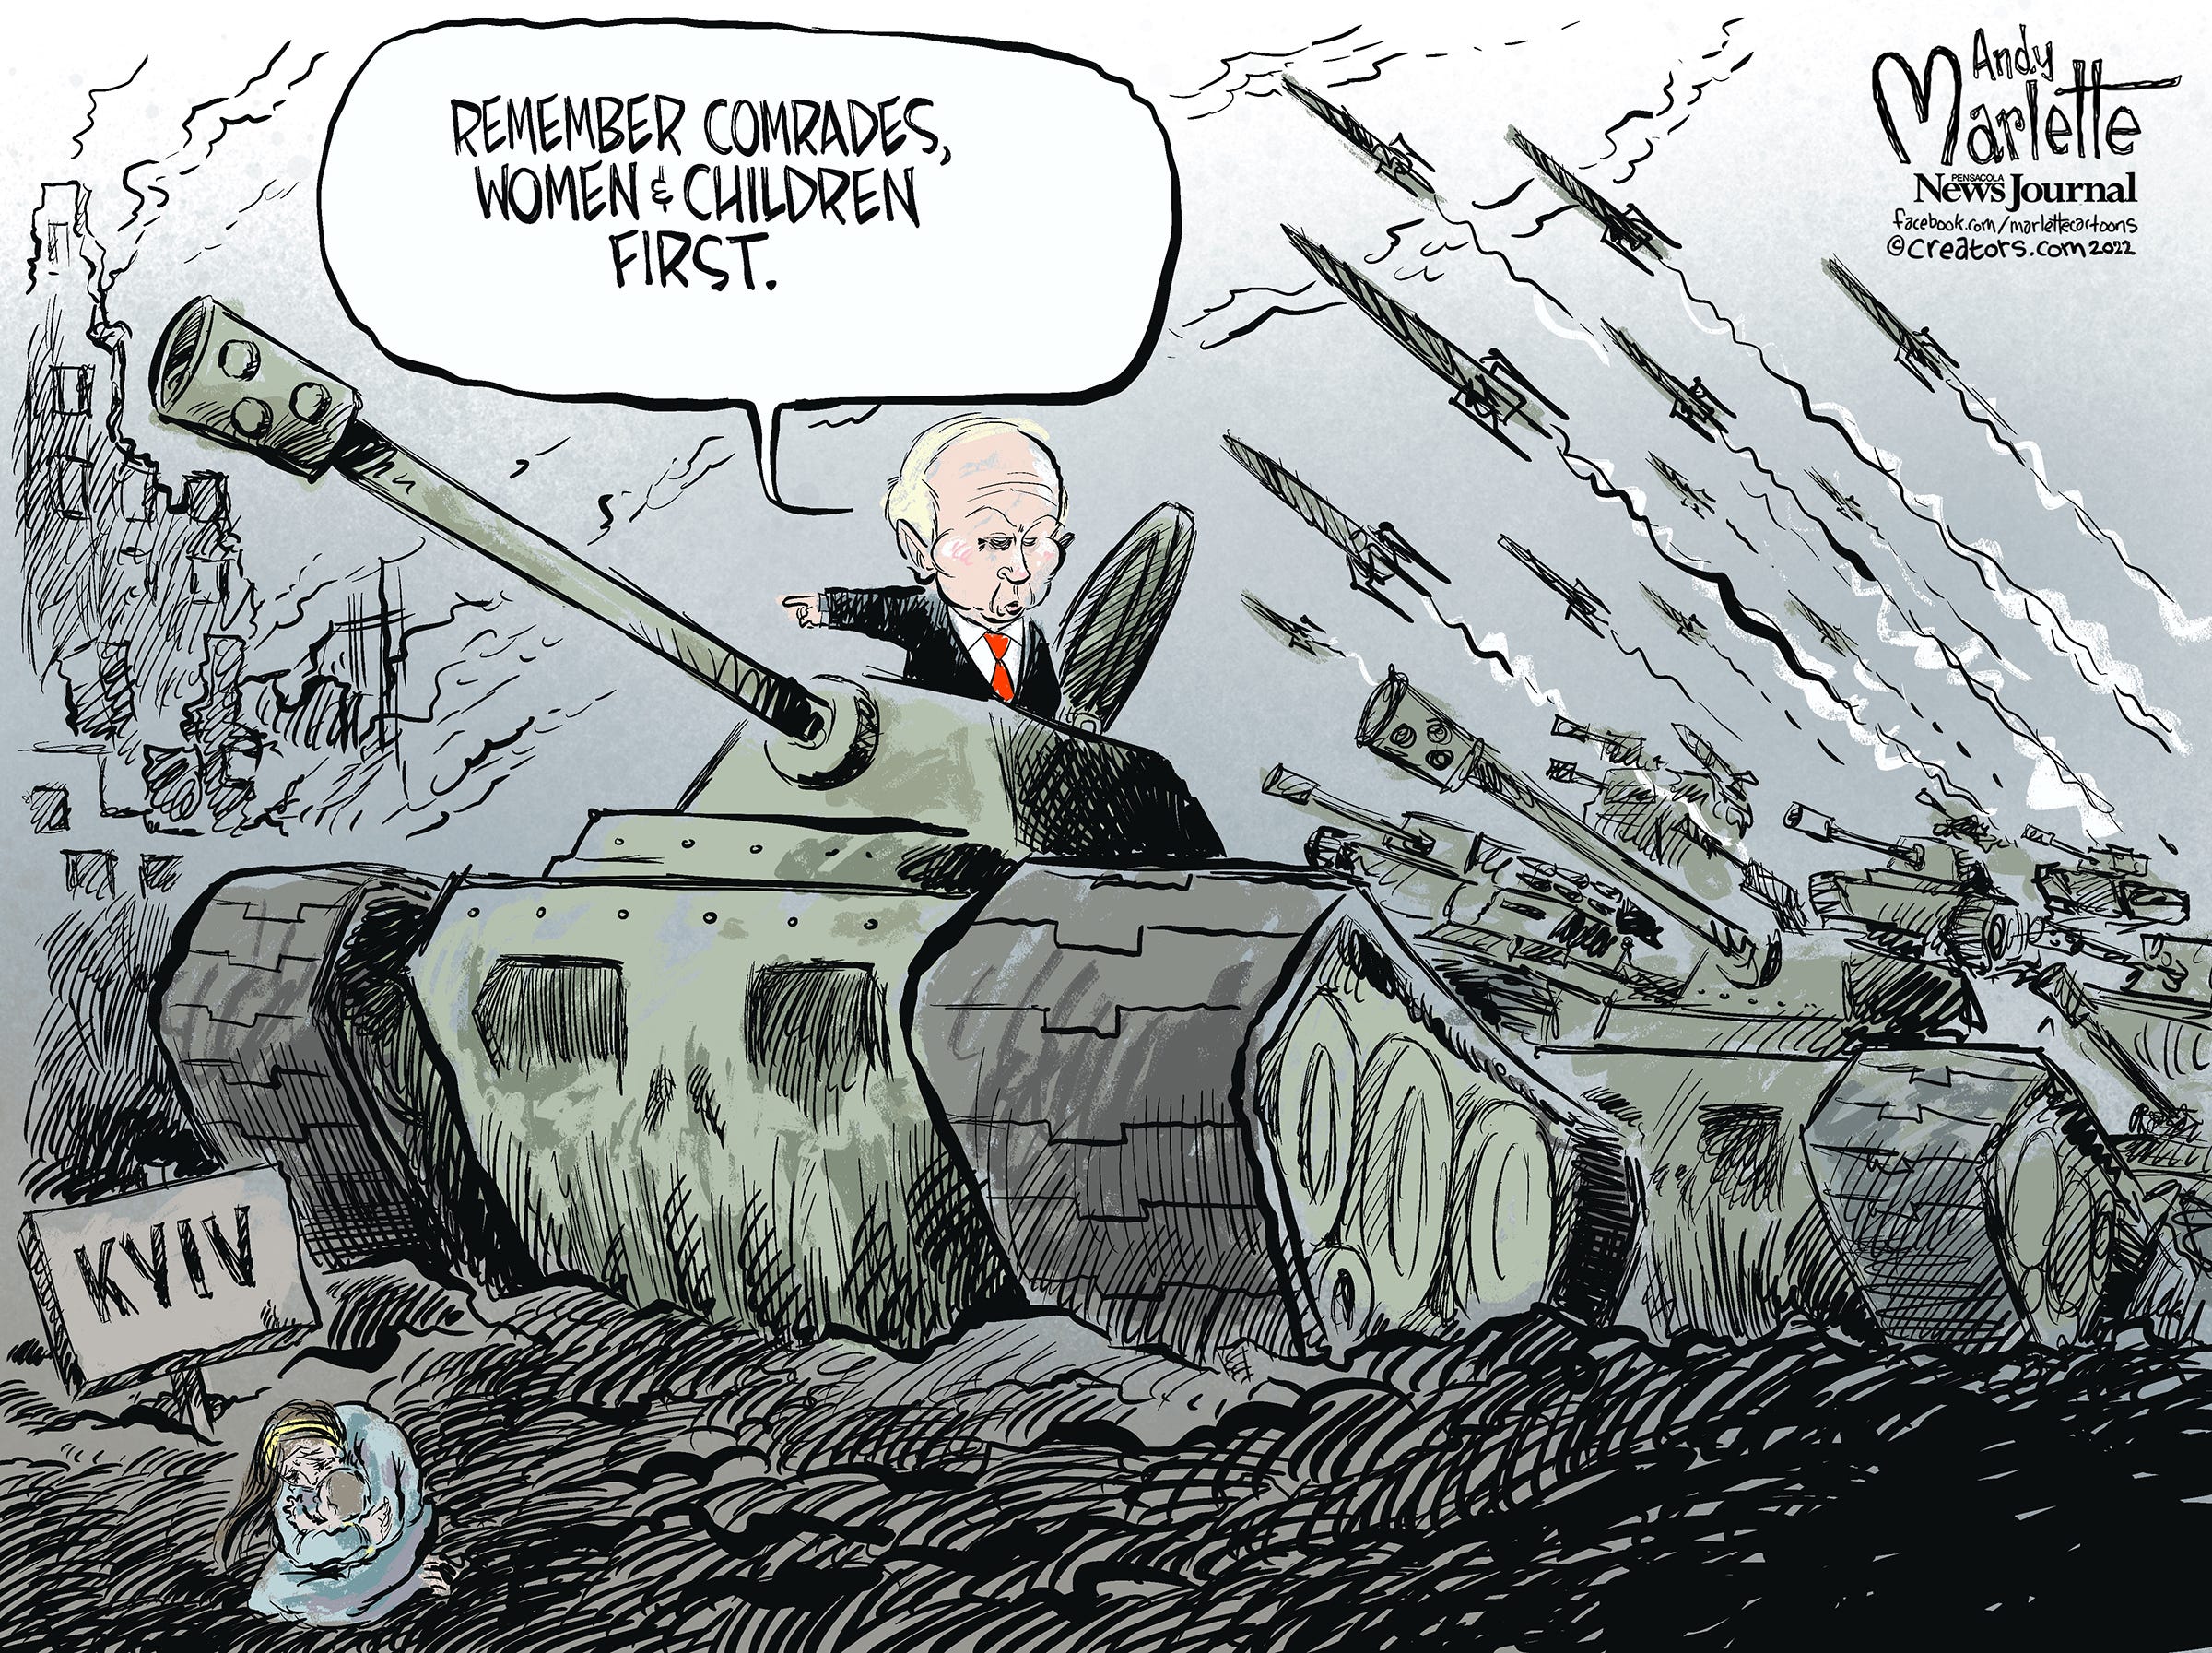 Marlette cartoon: Putin's war crimes